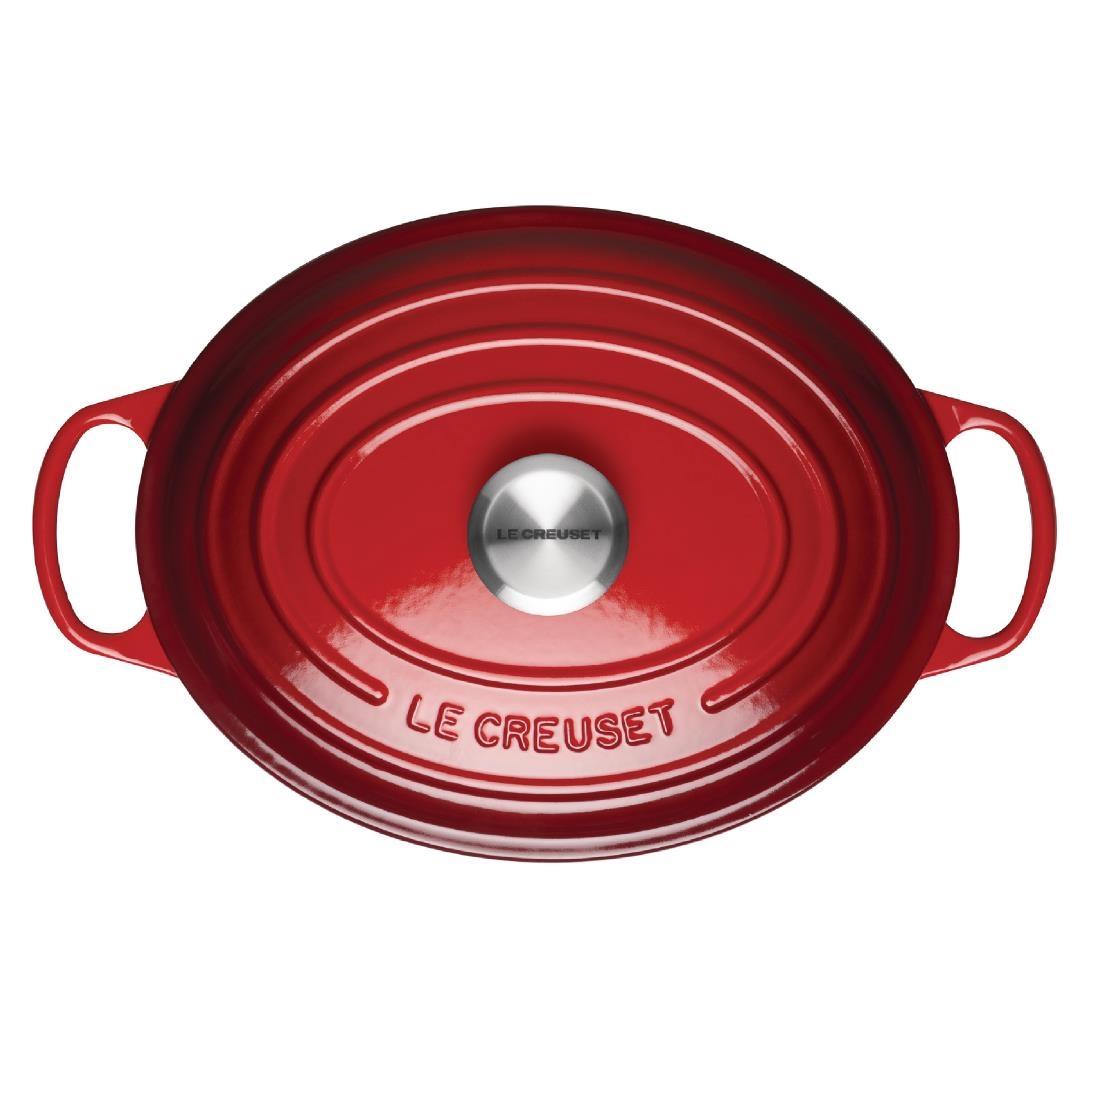 Le Creuset Cast Iron Oval Casserole 27cm 4.1L Cerise - DR463  - 2